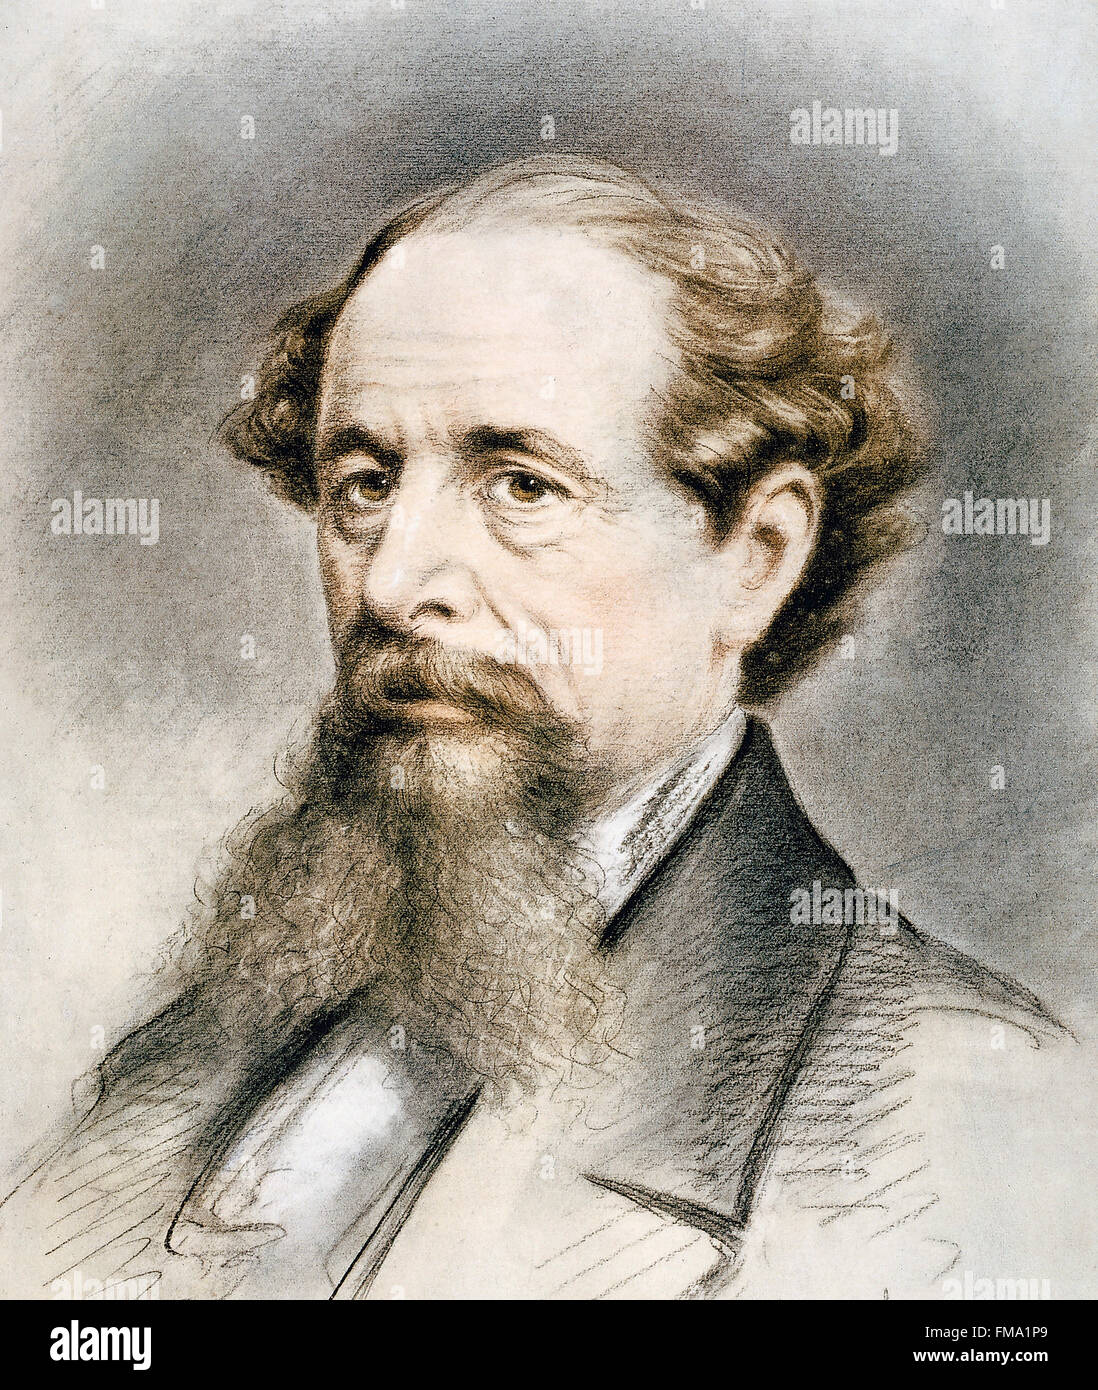 Charles Dickens. Retrato del escritor inglés del siglo XIX por el artista, Edward Lewis Goodwyn, 1869 Foto de stock